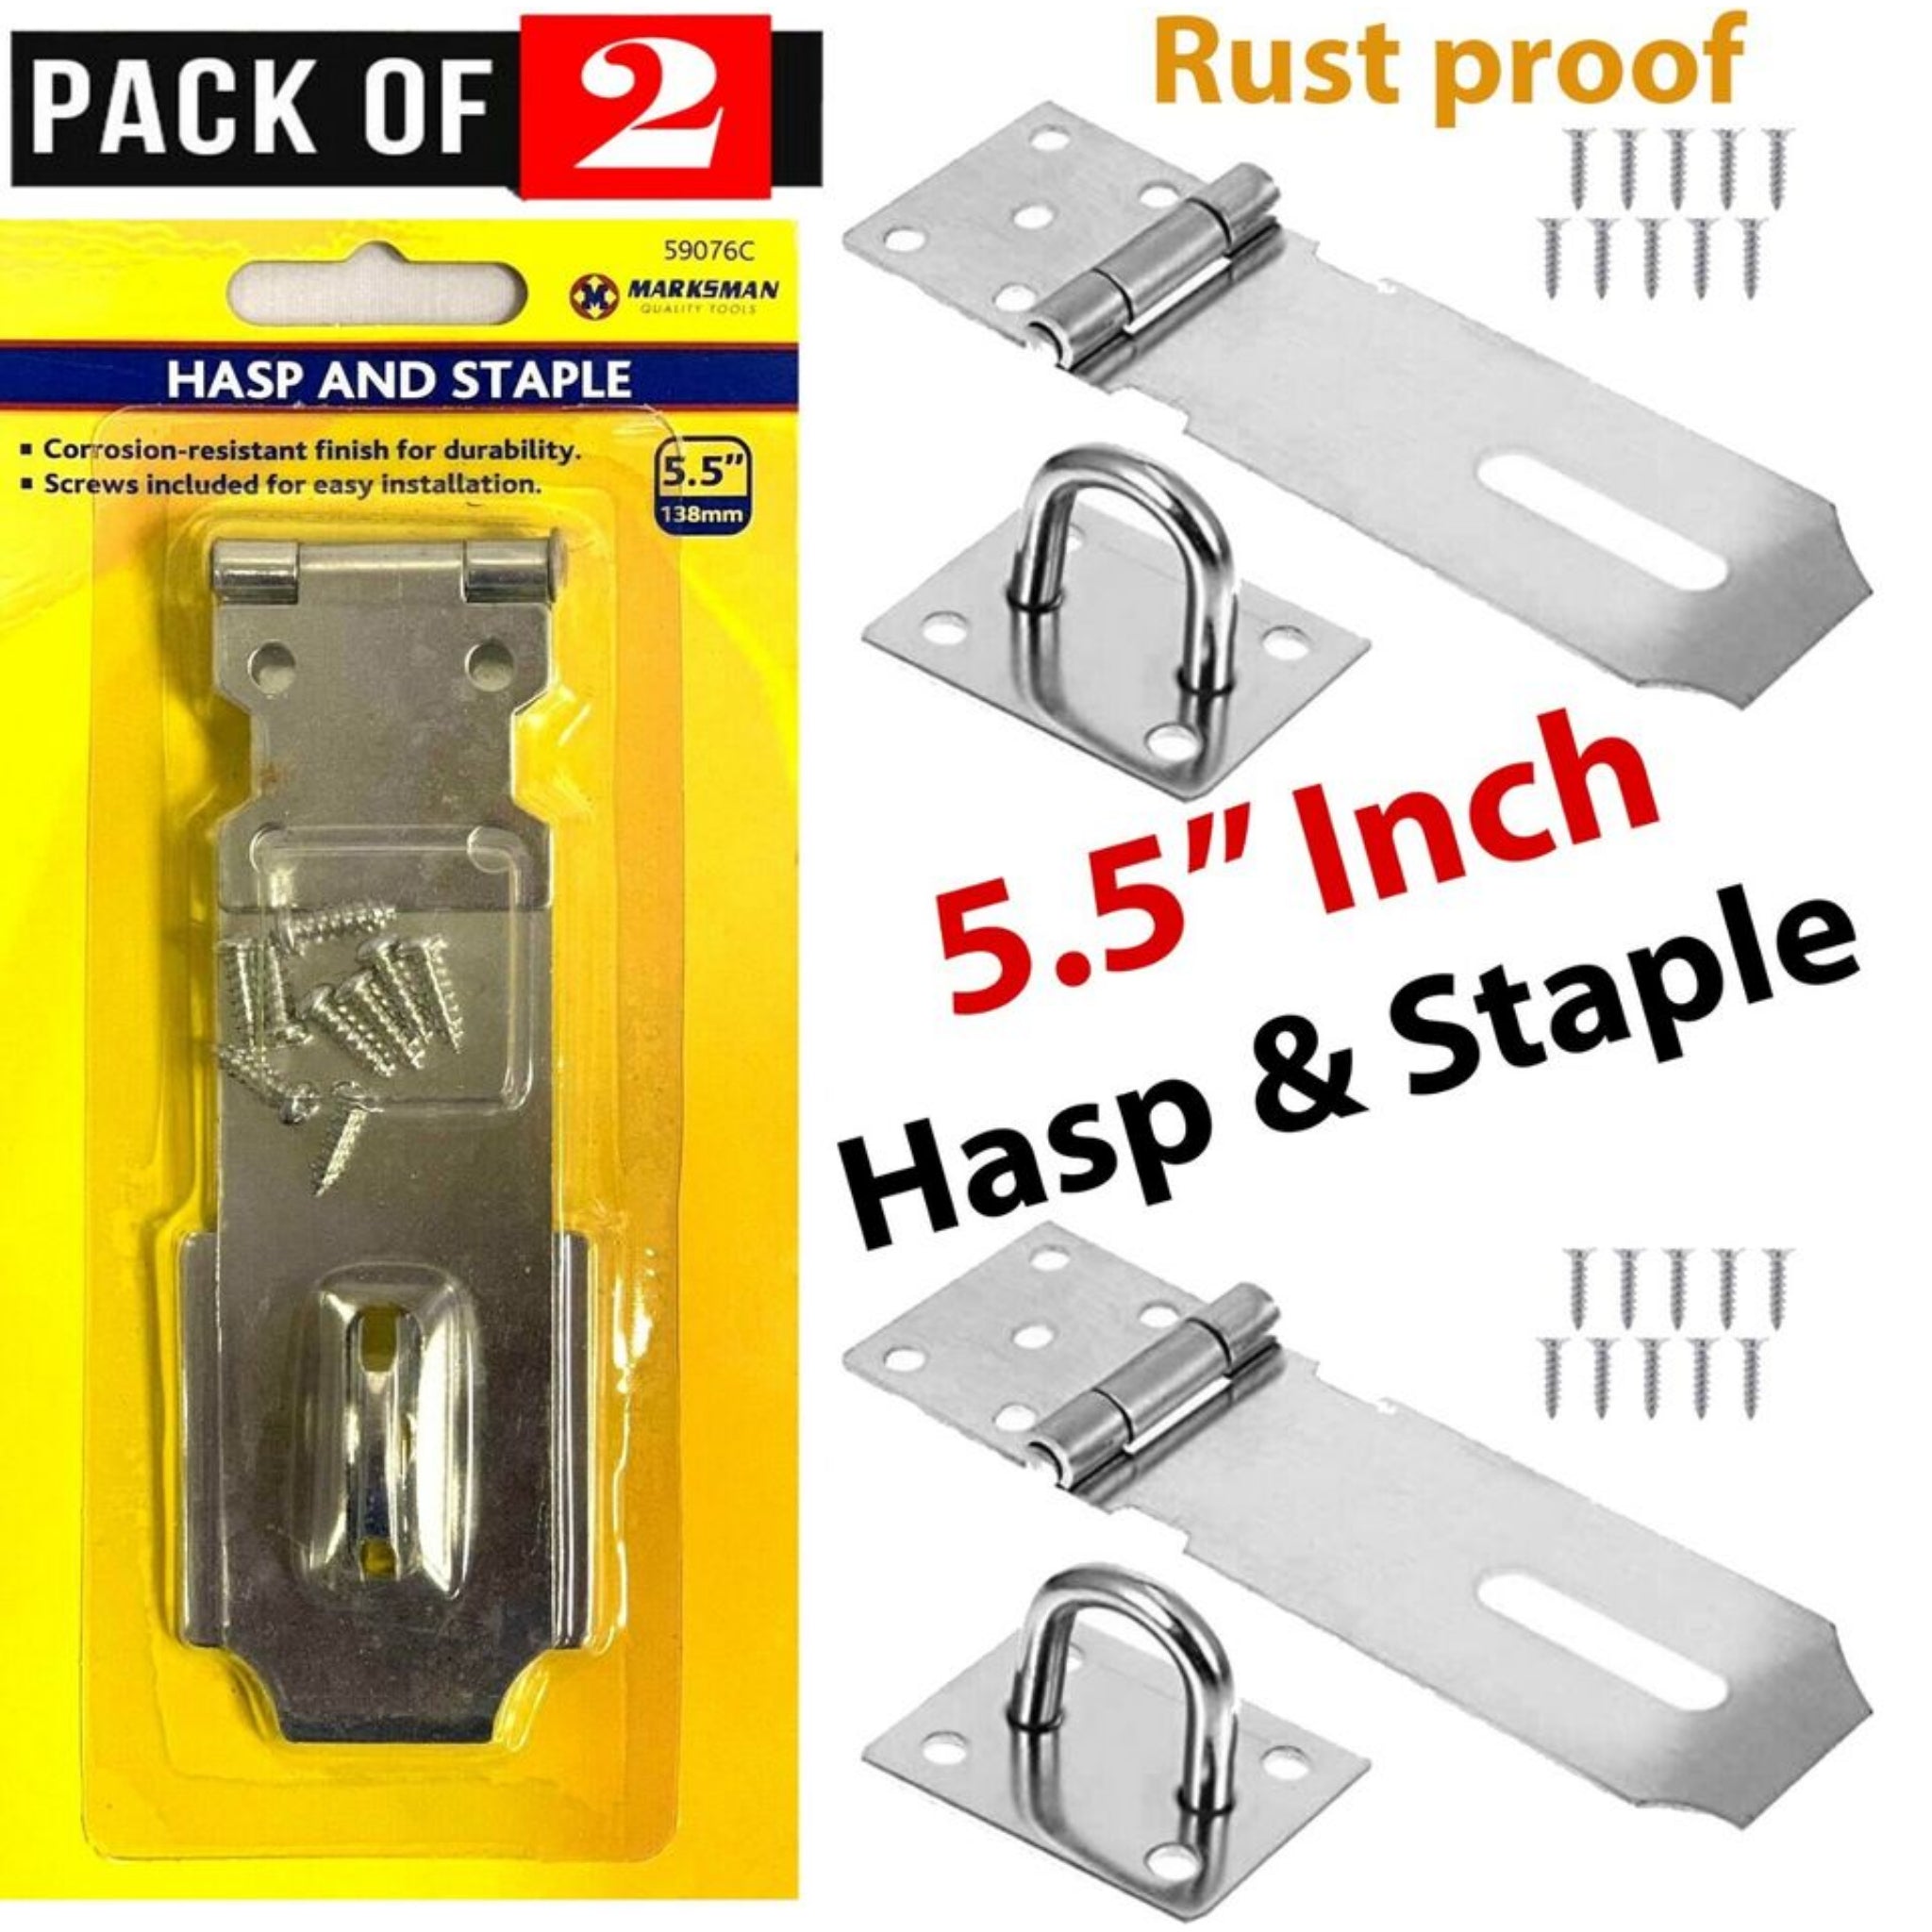 Beclen 2x Harp 5.5" Safety Hasp & Staple Gate Door Zinc 138mm Shed Latch Lock for padlock - UK